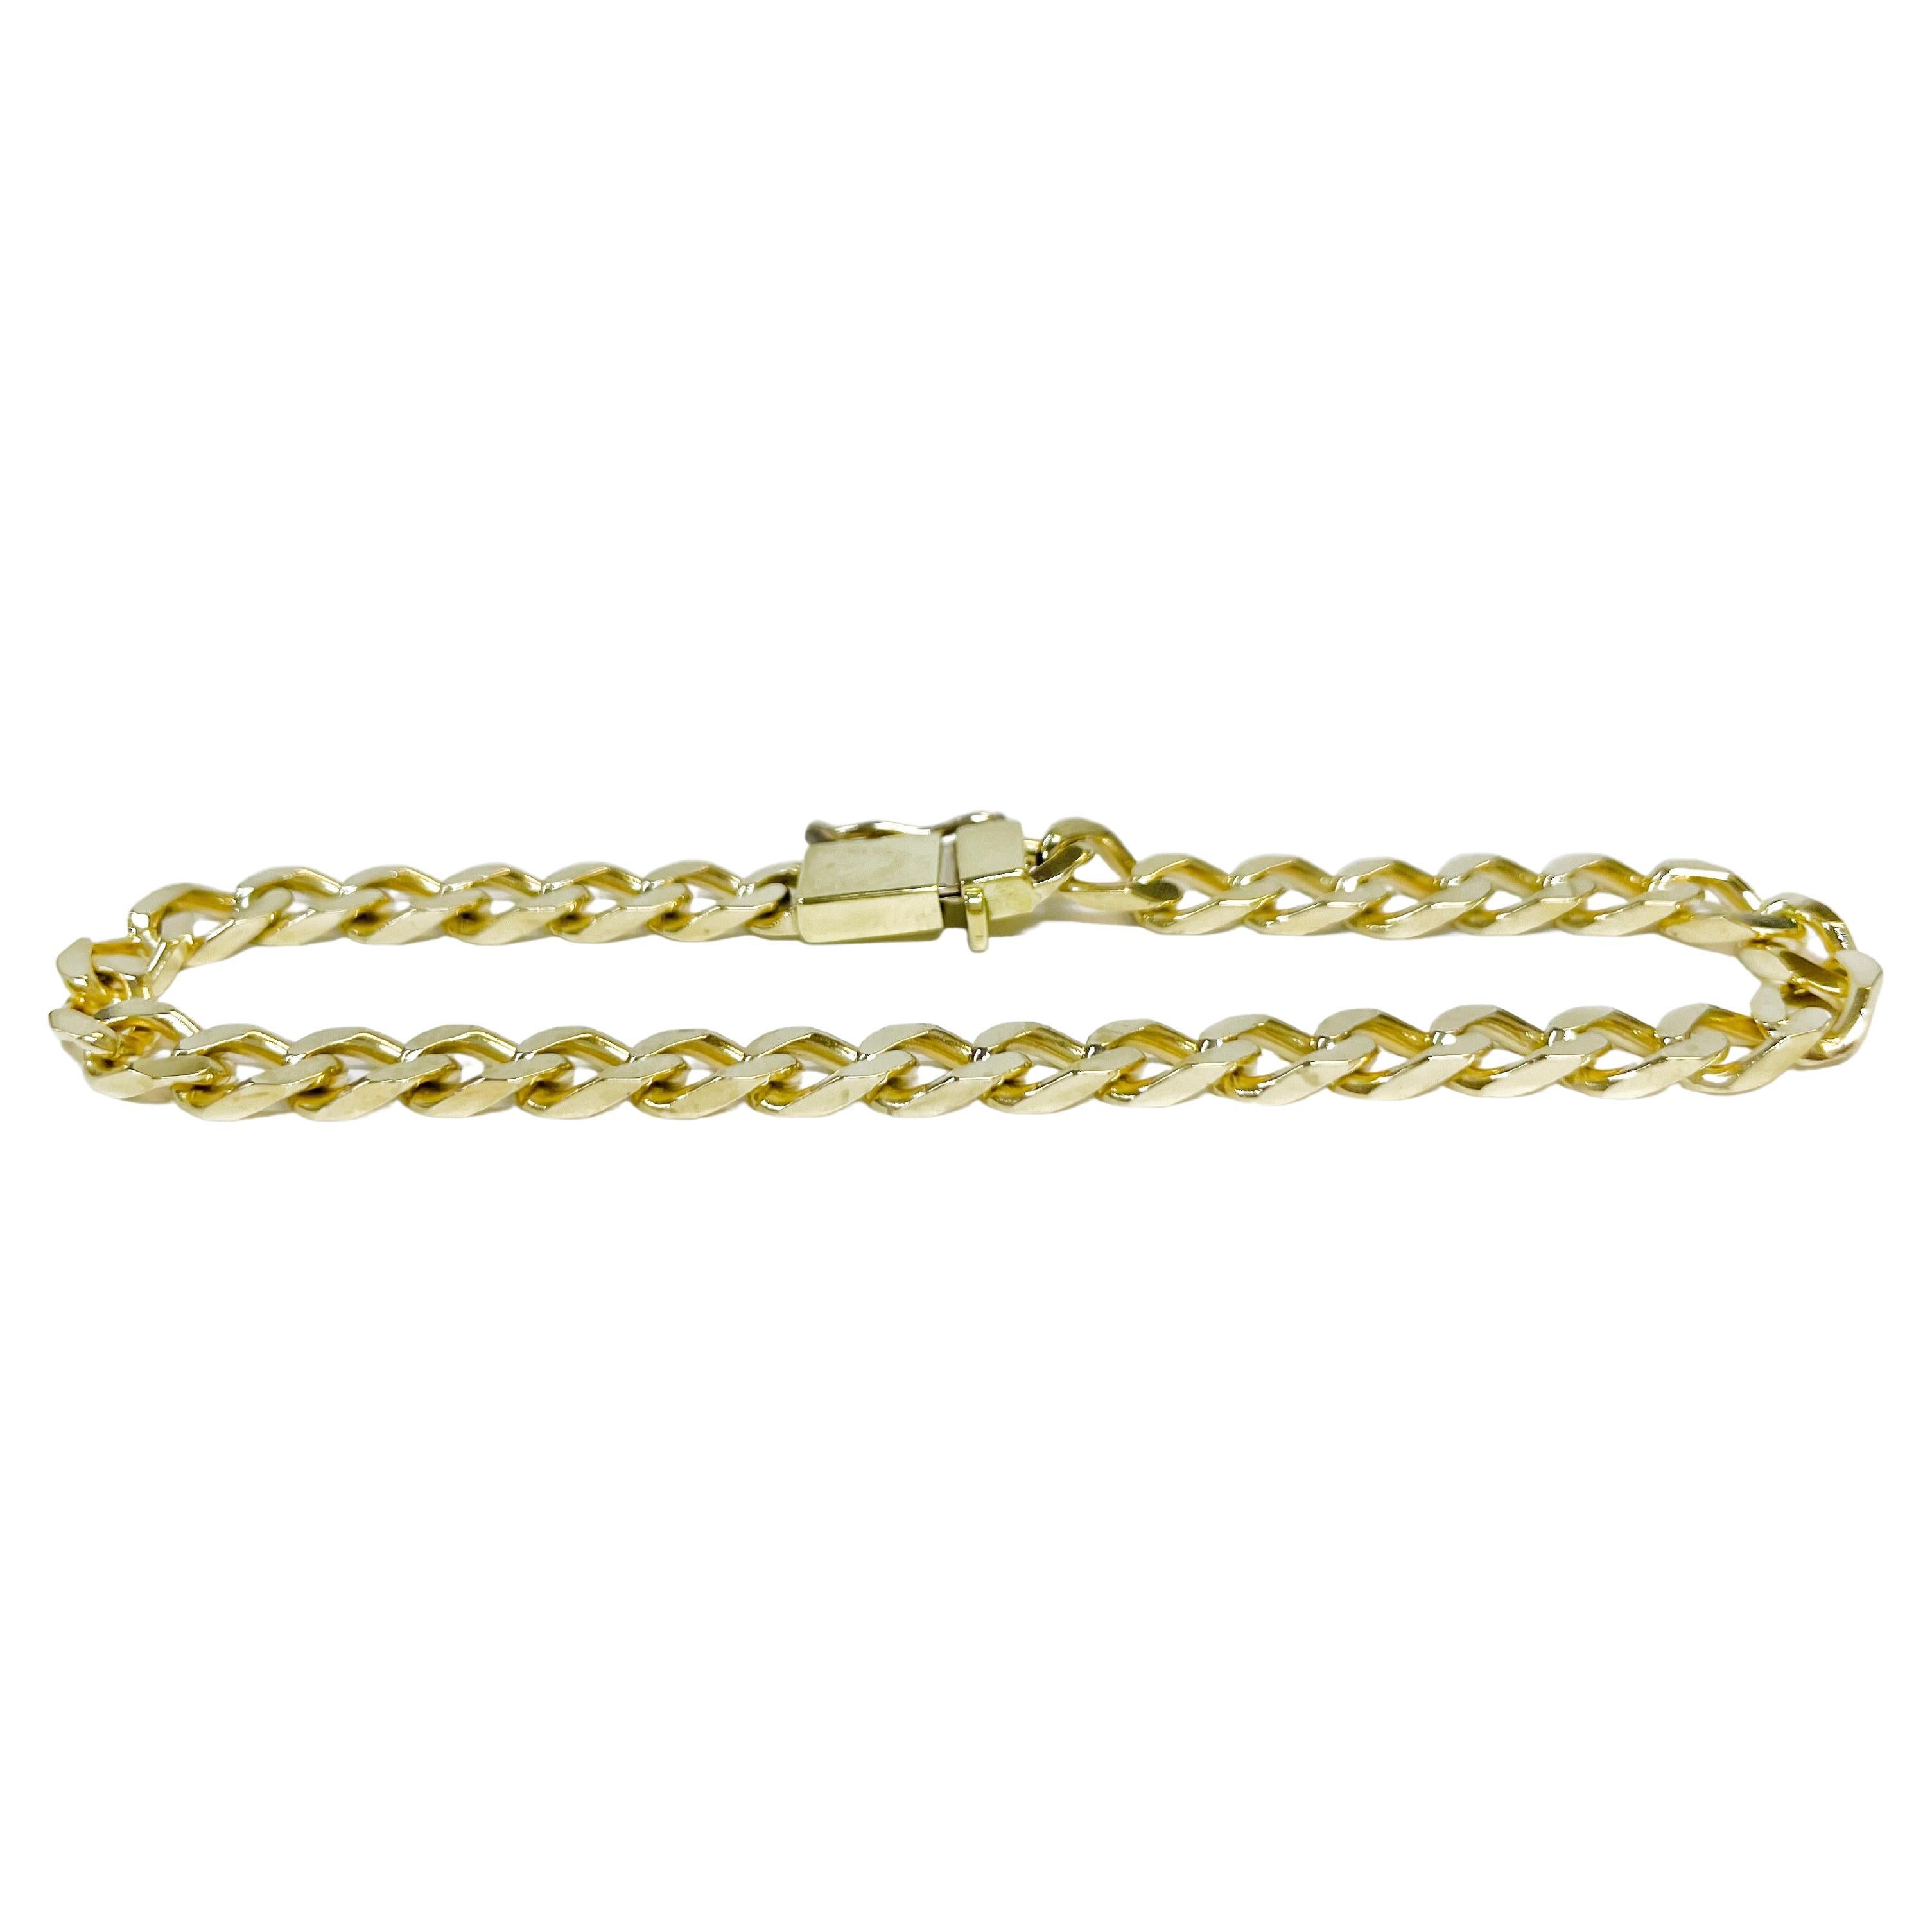 Yellow Gold Flat-Curb Link Bracelet